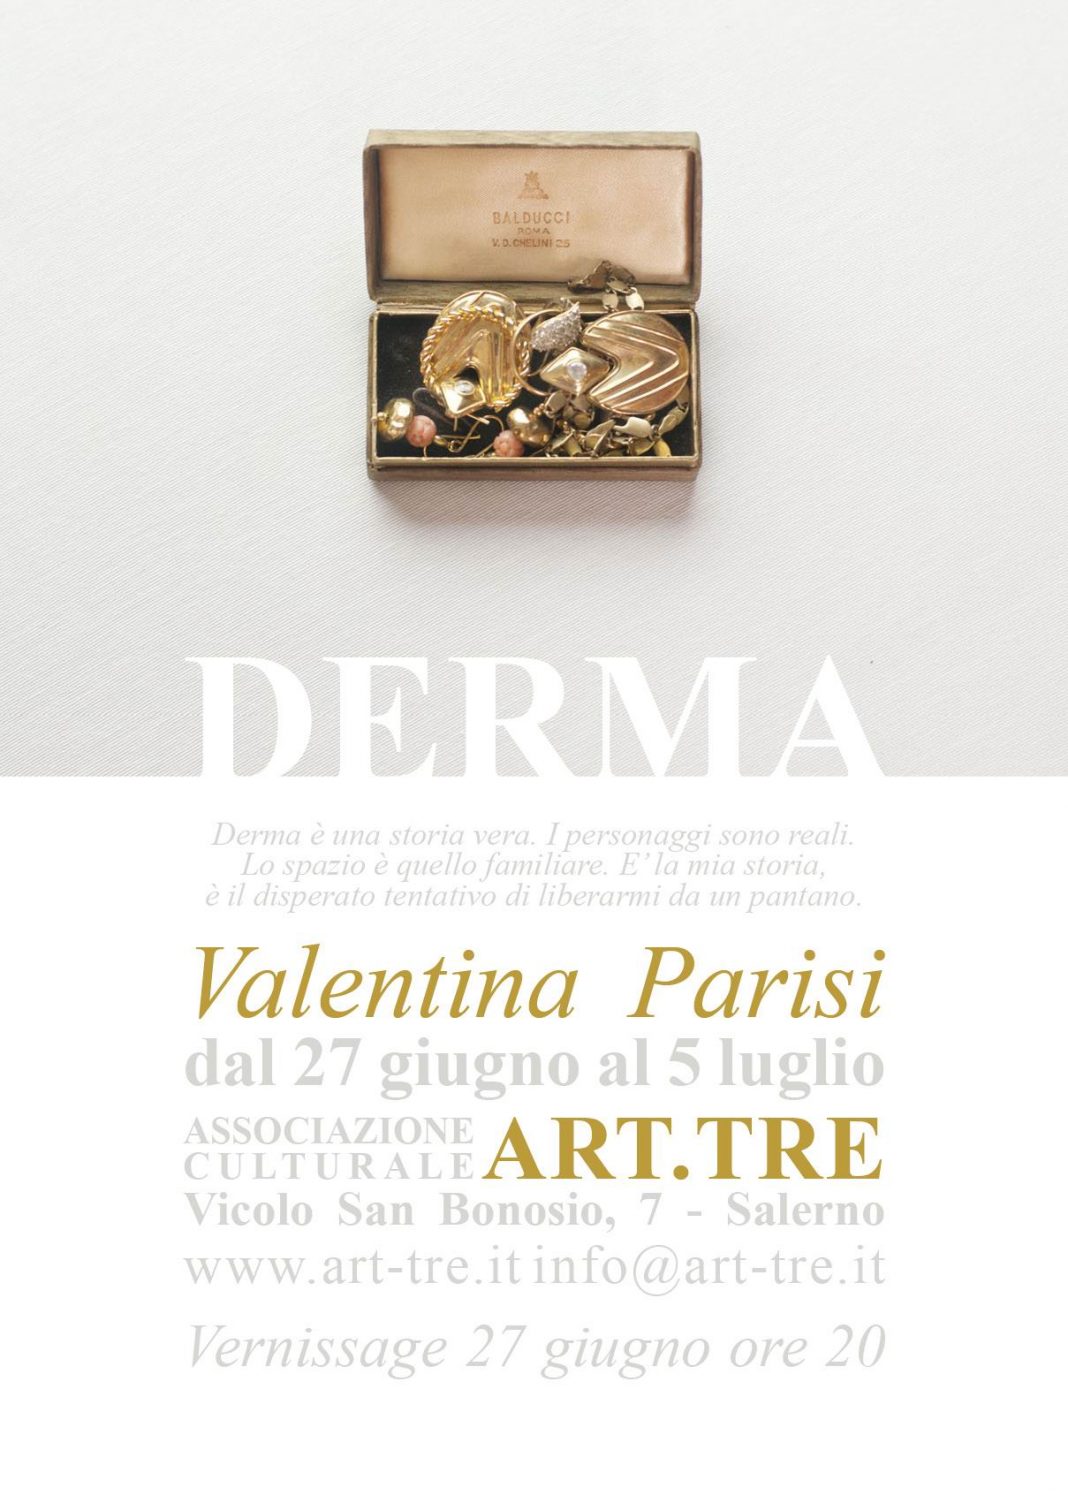 Valentina Parisi  – Dermahttps://www.exibart.com/repository/media/eventi/2014/06/valentina-parisi-8211-derma-1068x1503.jpg